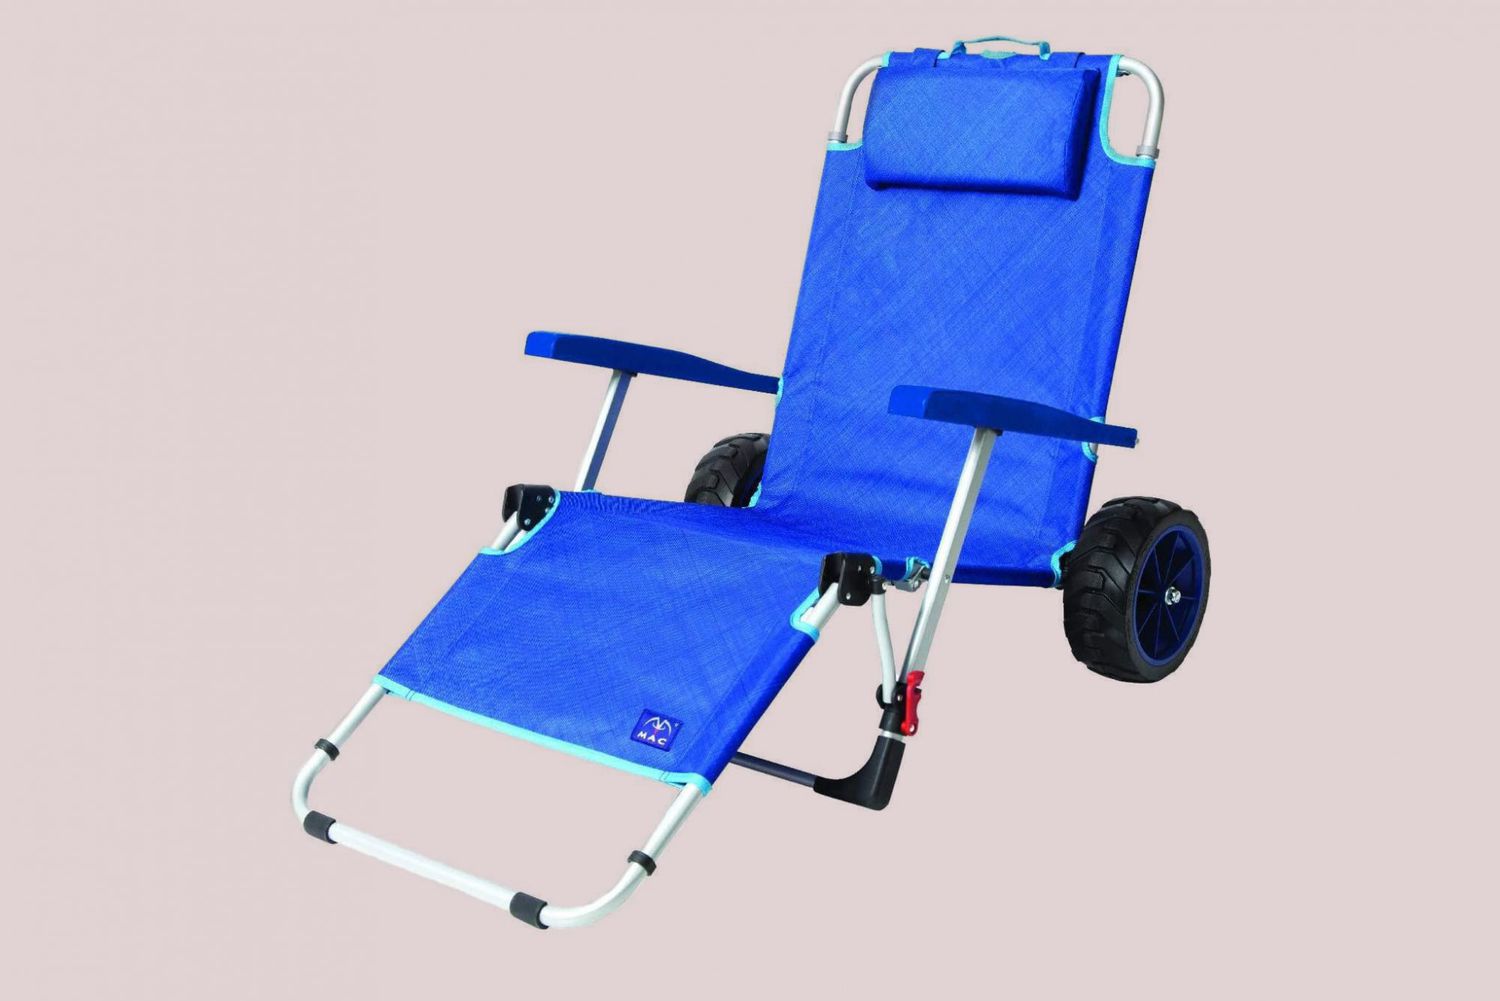 MacSports Heavy Duty Outdoor Folding Wagon Double Decker Portable Lightweight Utility Cart Rolling Cart